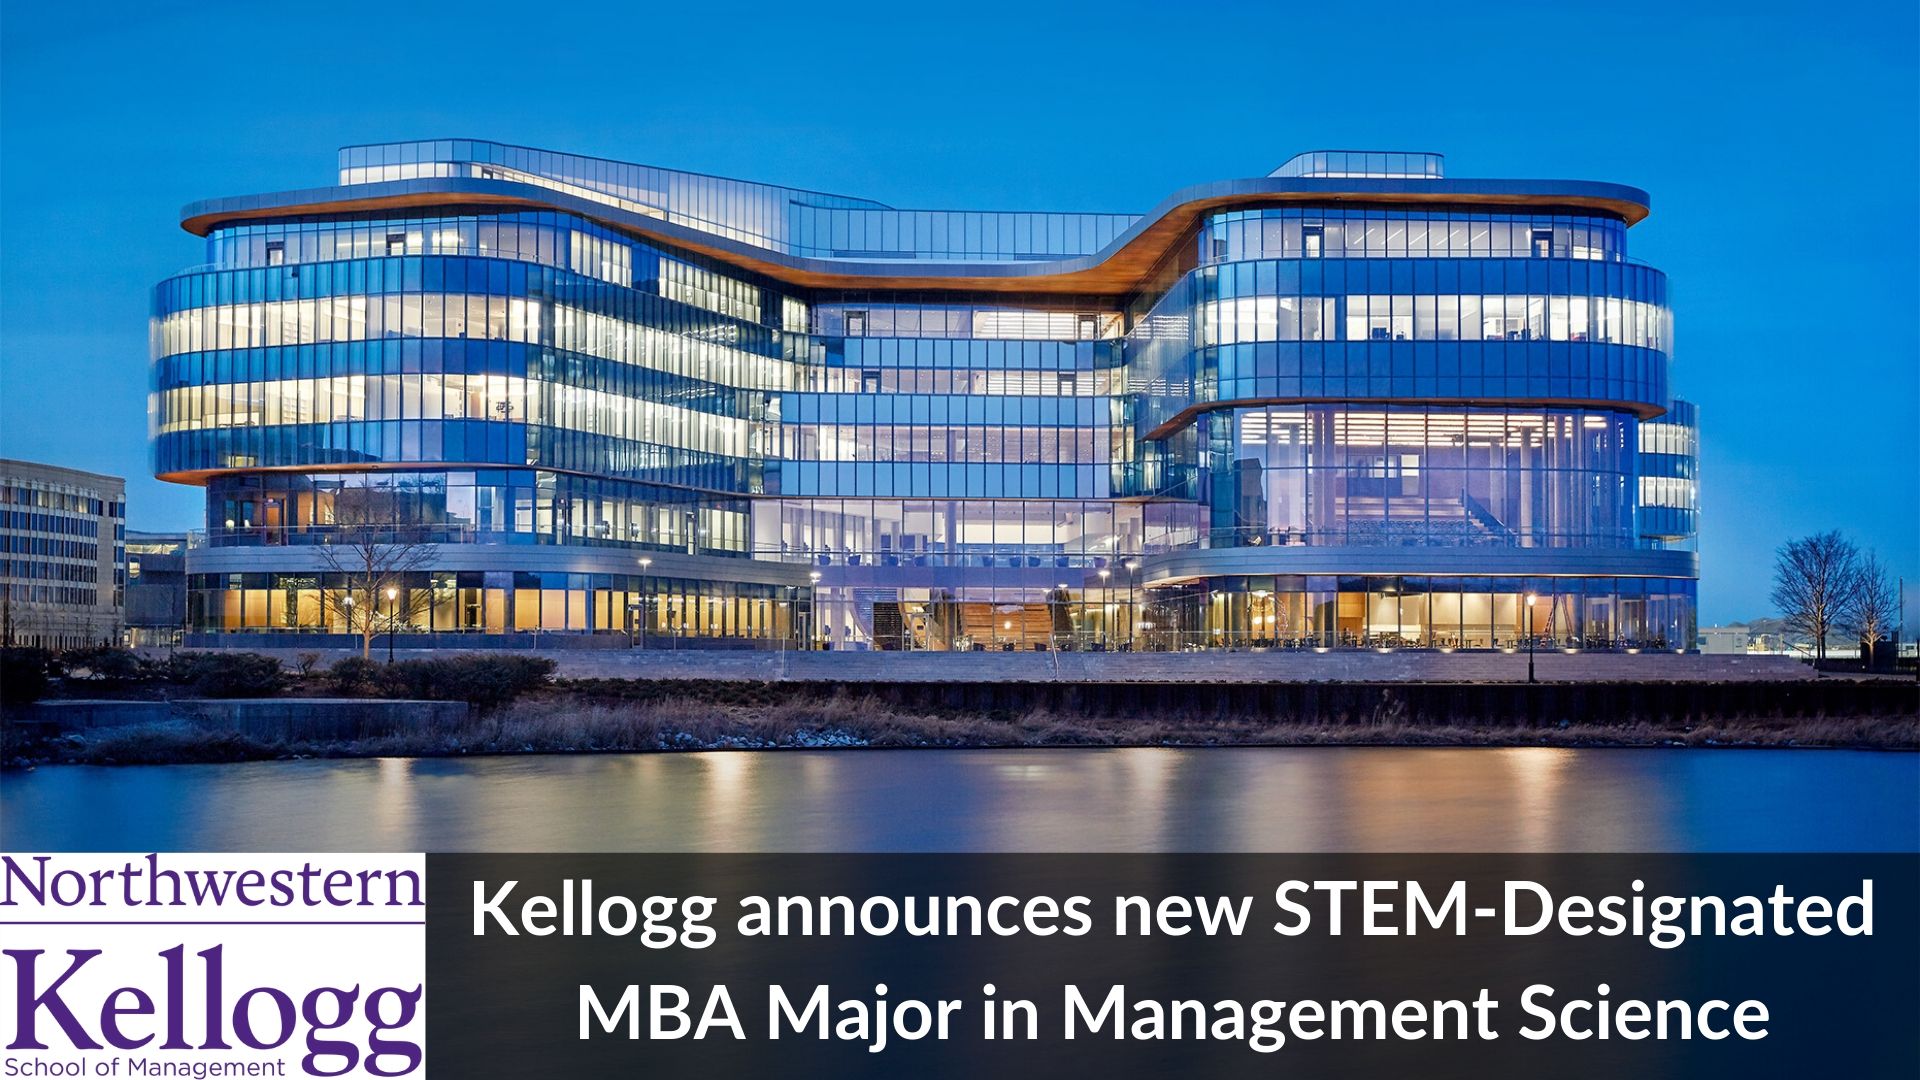 Kellogg's new STEM-Designated MBA Major